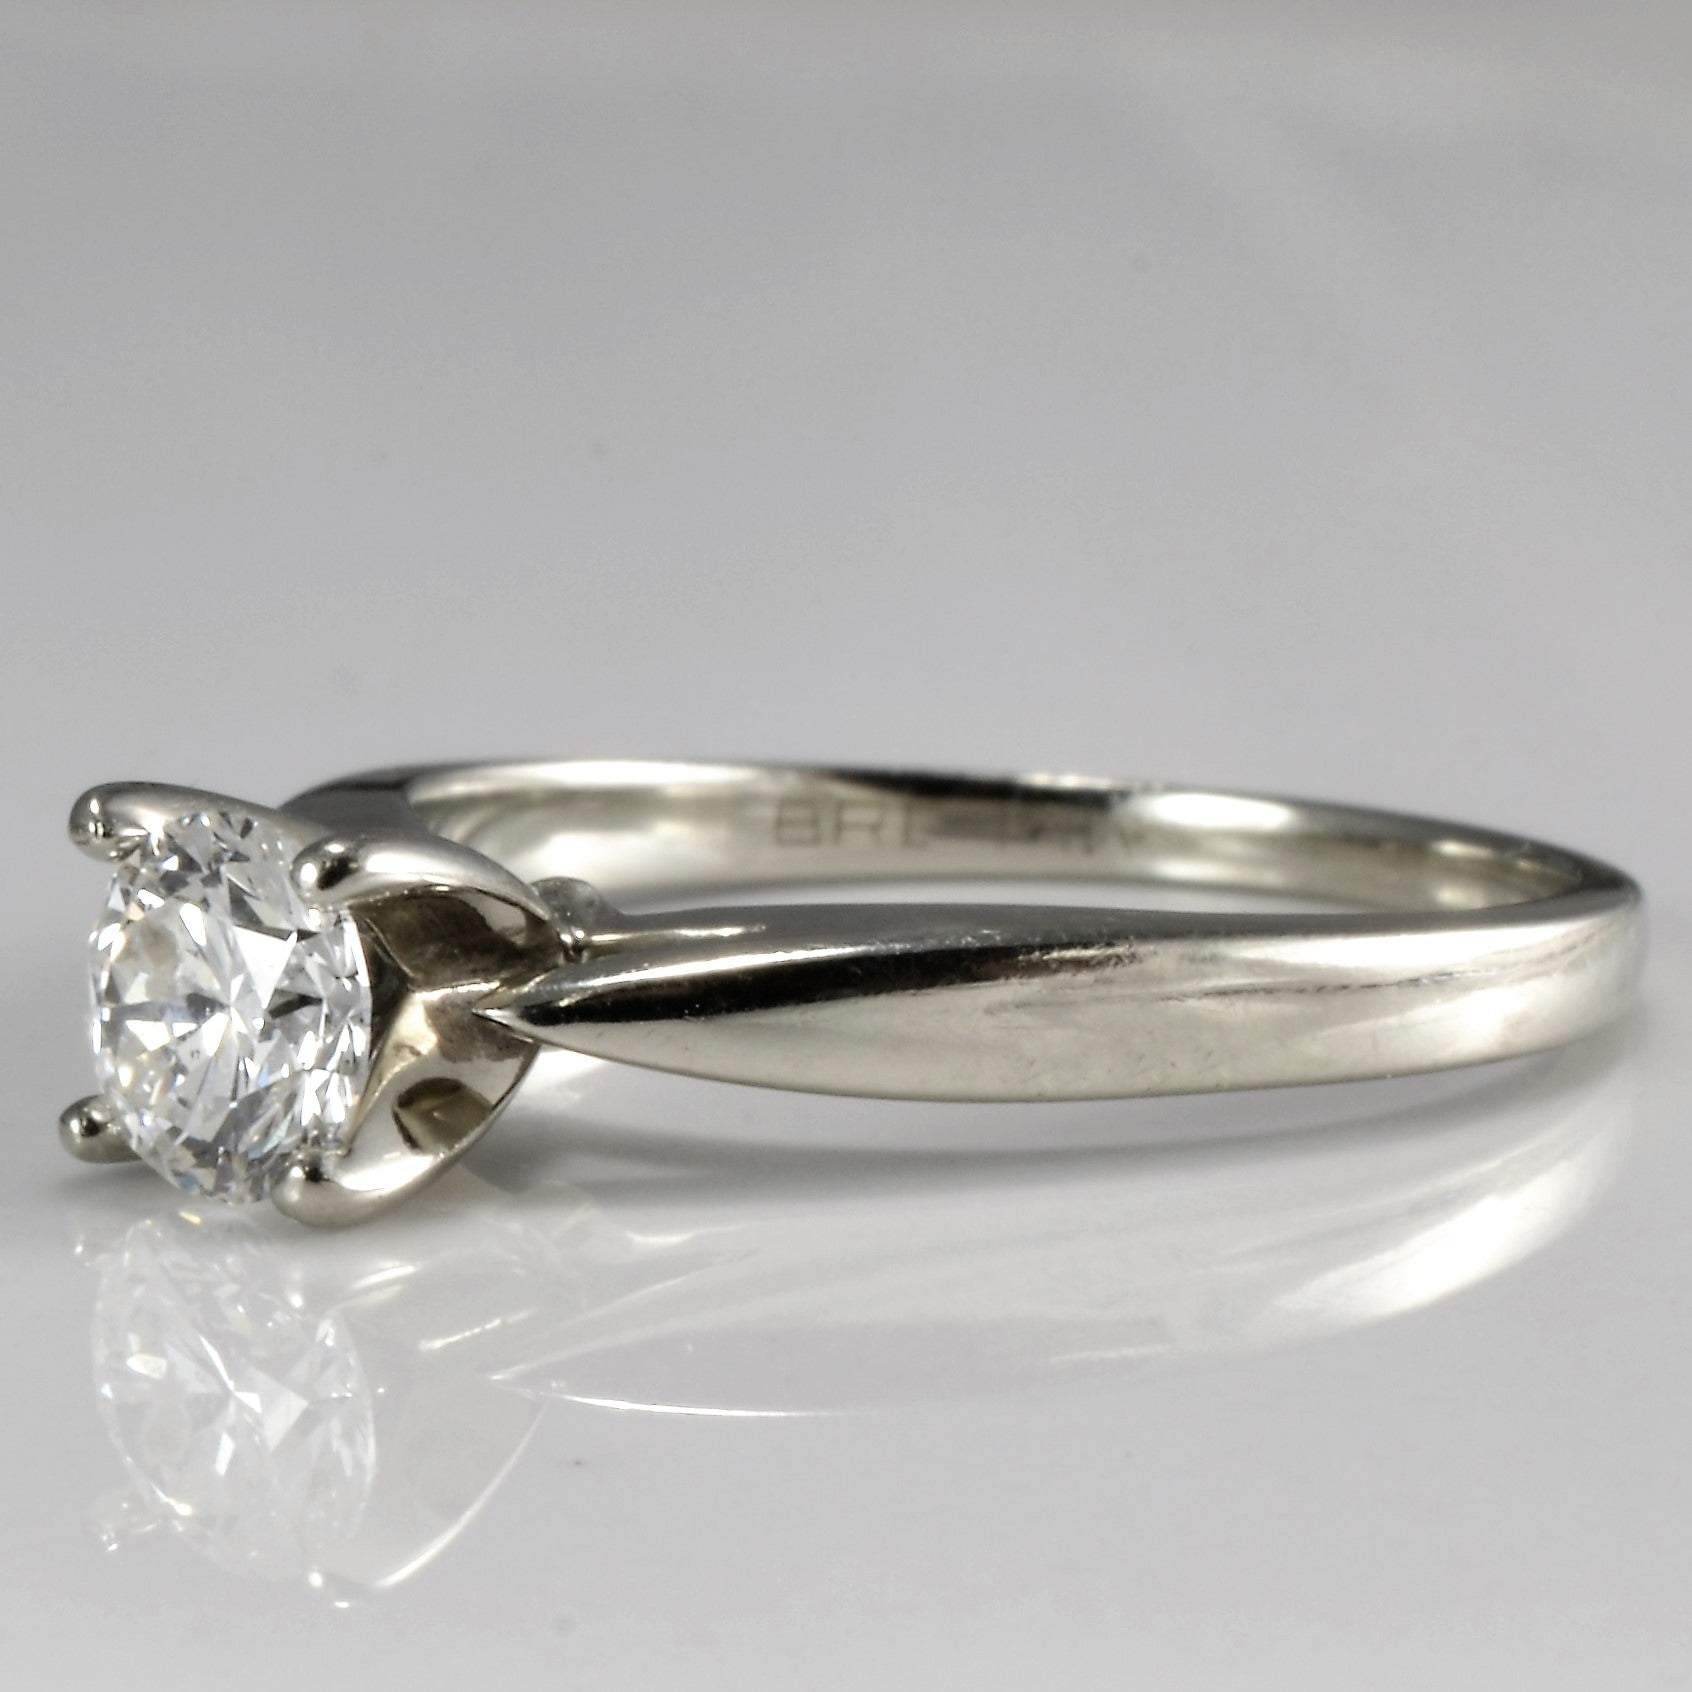 19K Gold Solitaire Diamond Engagement Ring | 0.51 ct, SZ 5.5 |